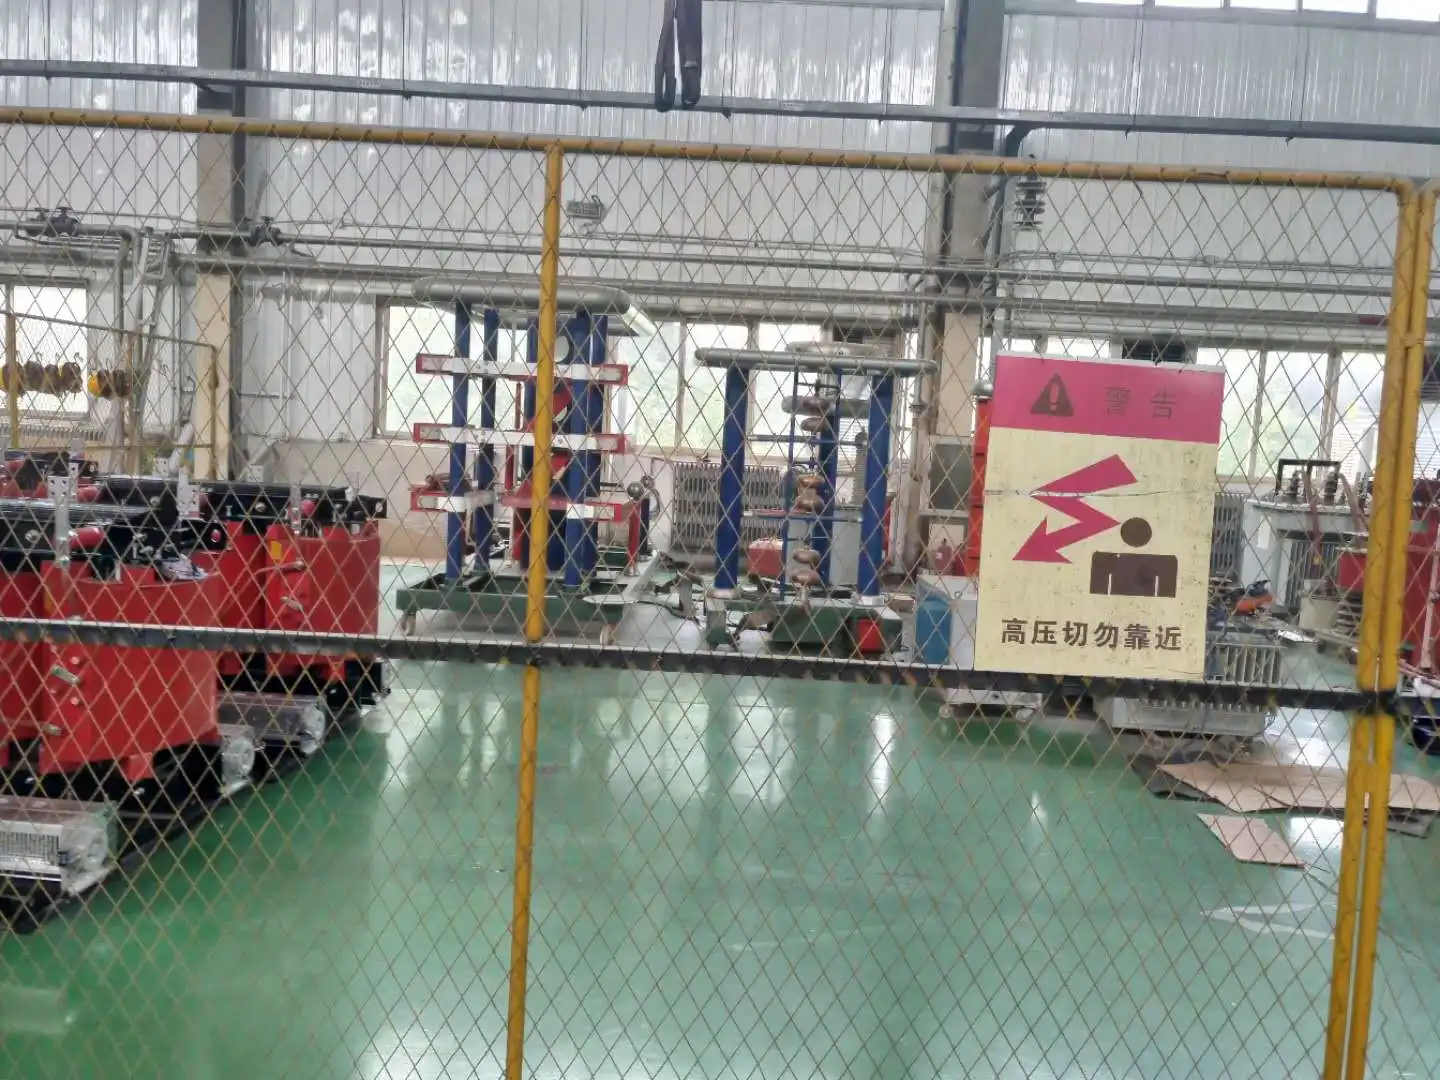 Huazheng Electric Impulse Withstand Voltage Test Machine 3000kv impulse voltage generator